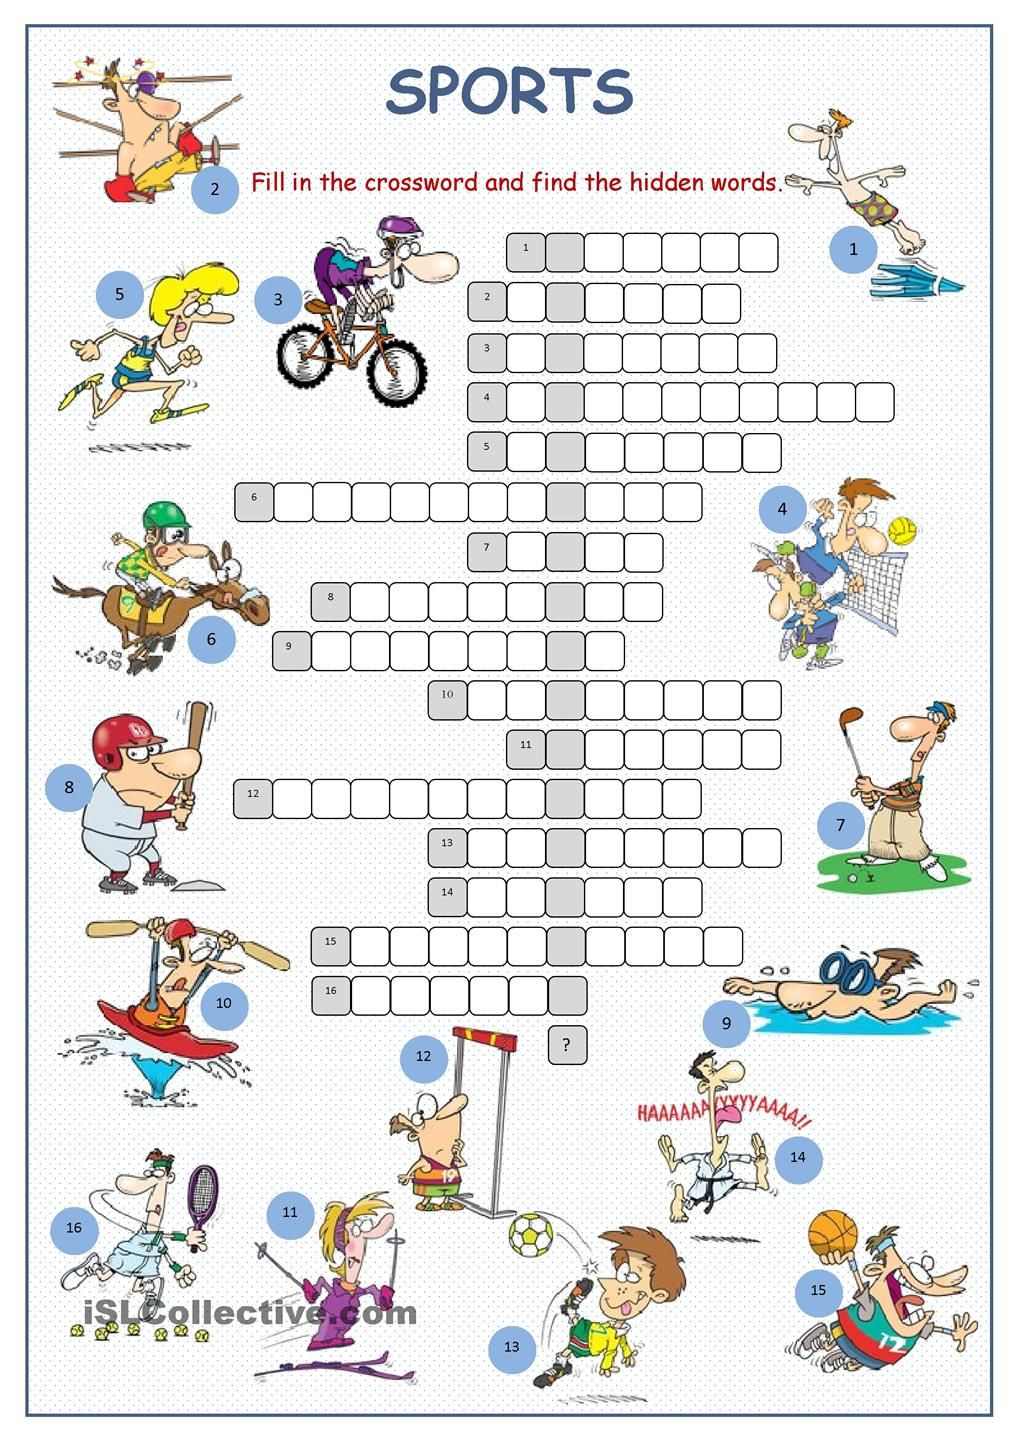 Sports Crossword Puzzle | English | Sports Crossword, Sport English - Printable Crossword Puzzles About Sports